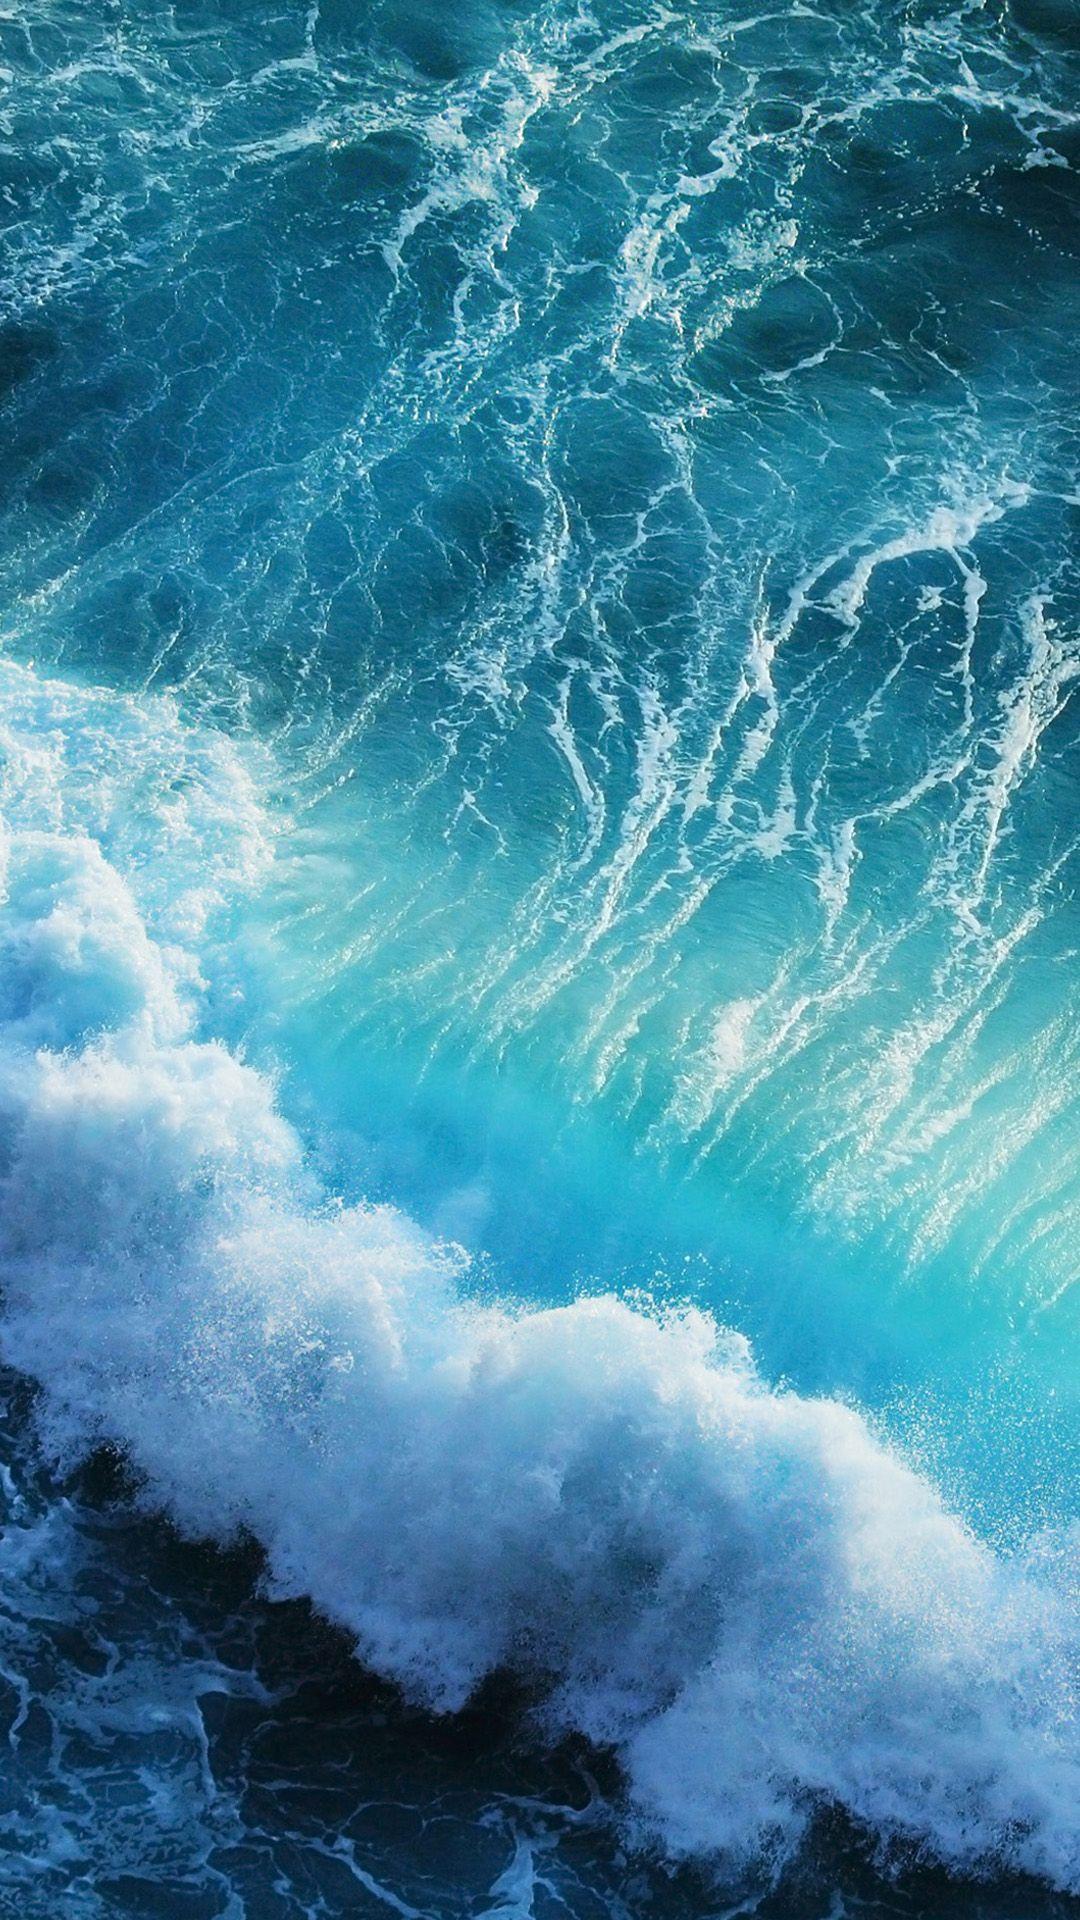 450 Stunning Blue Ocean Pictures  Download Free Images on Unsplash